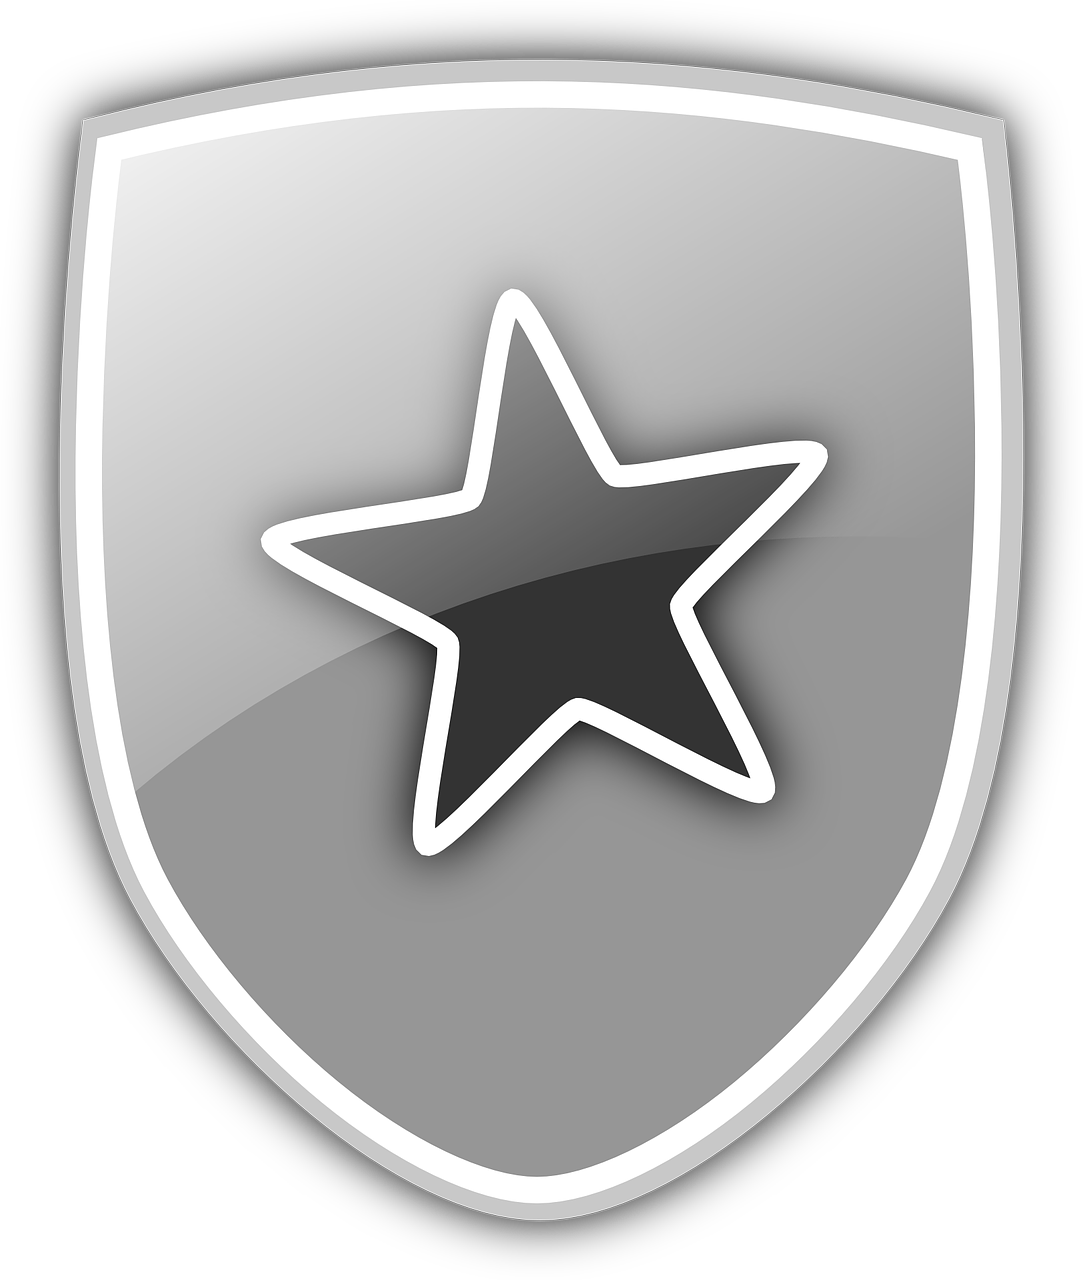 emblem security shield free photo